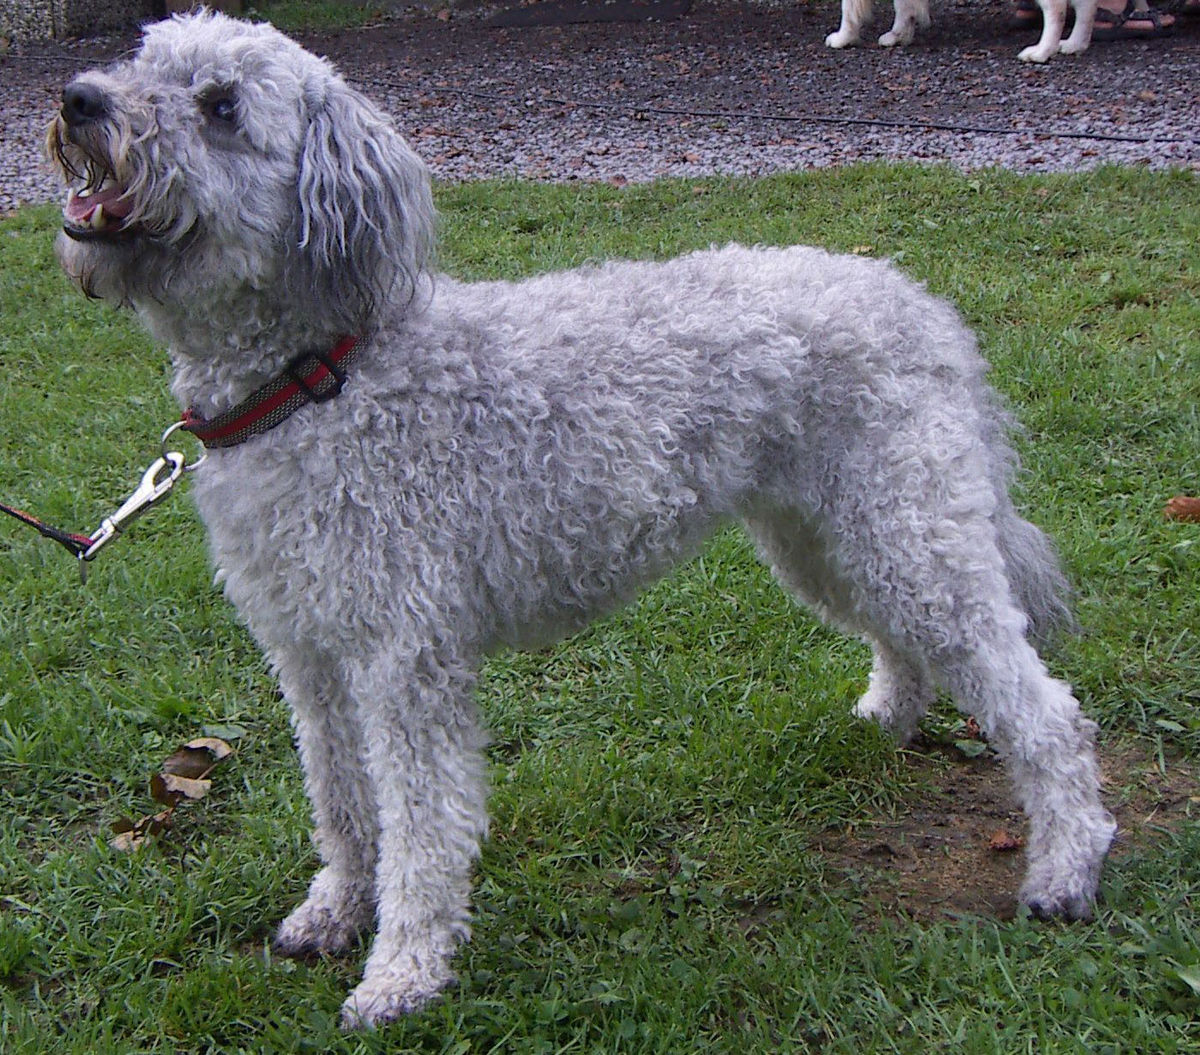 Pumi dog - Wikipedia